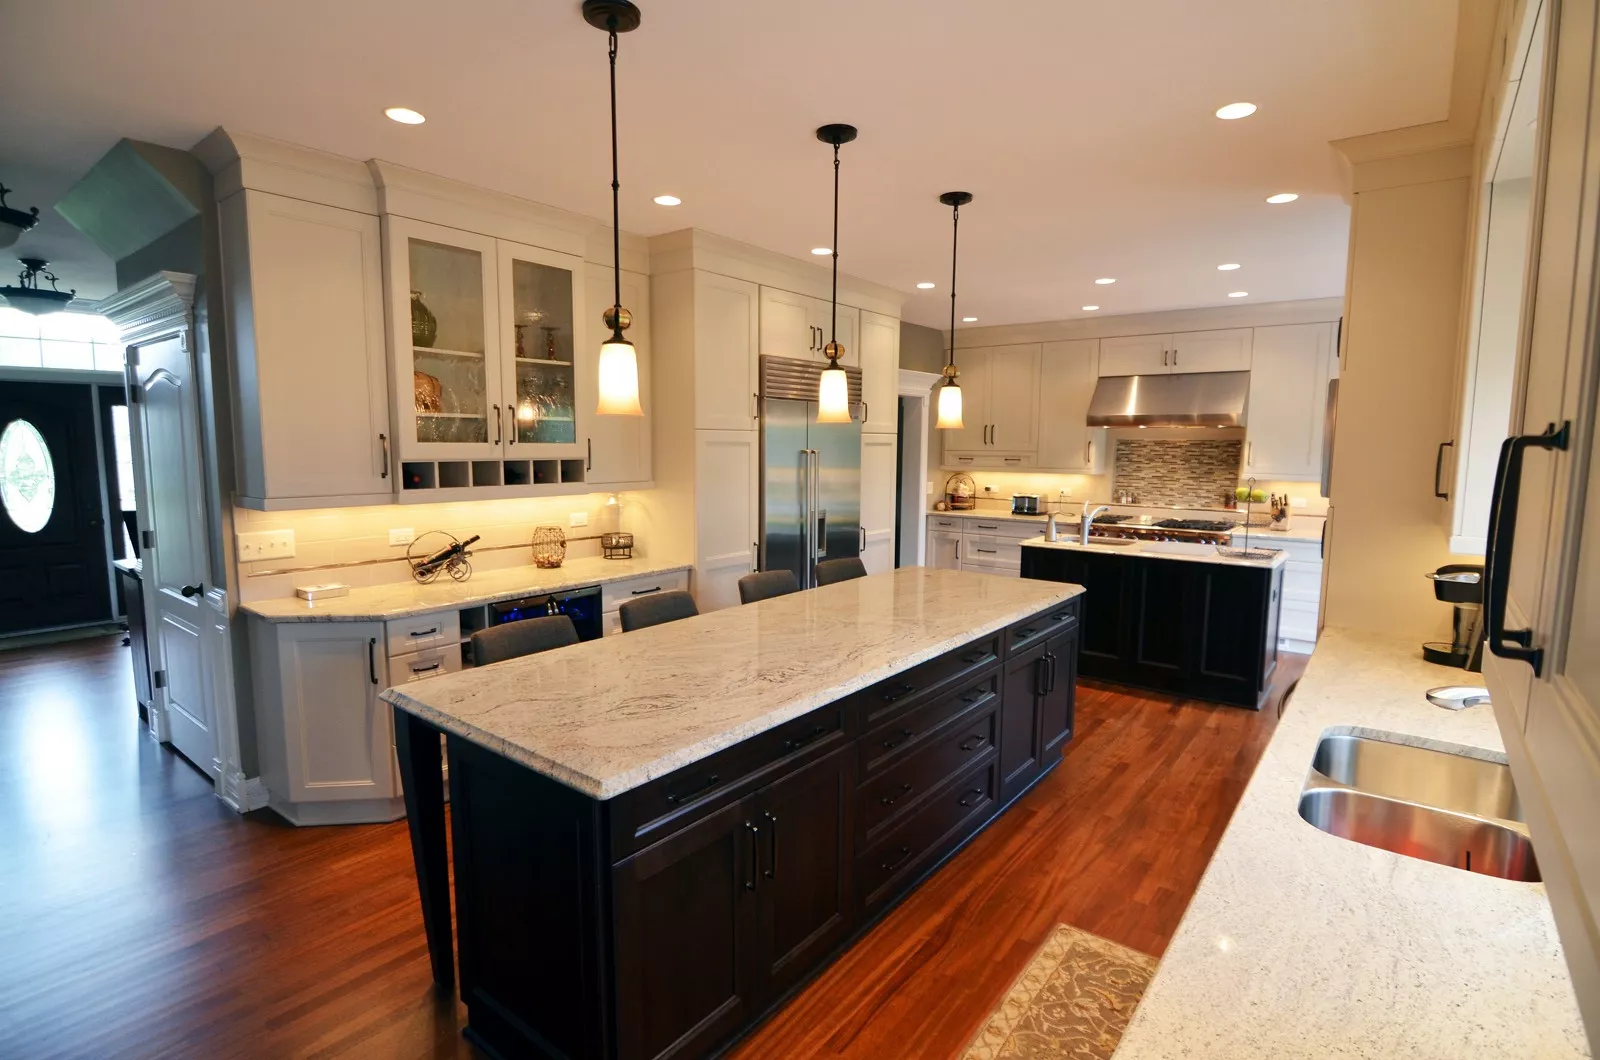 the kitchen master renovation dark cabinets light quartz countertops pendant lighting large island